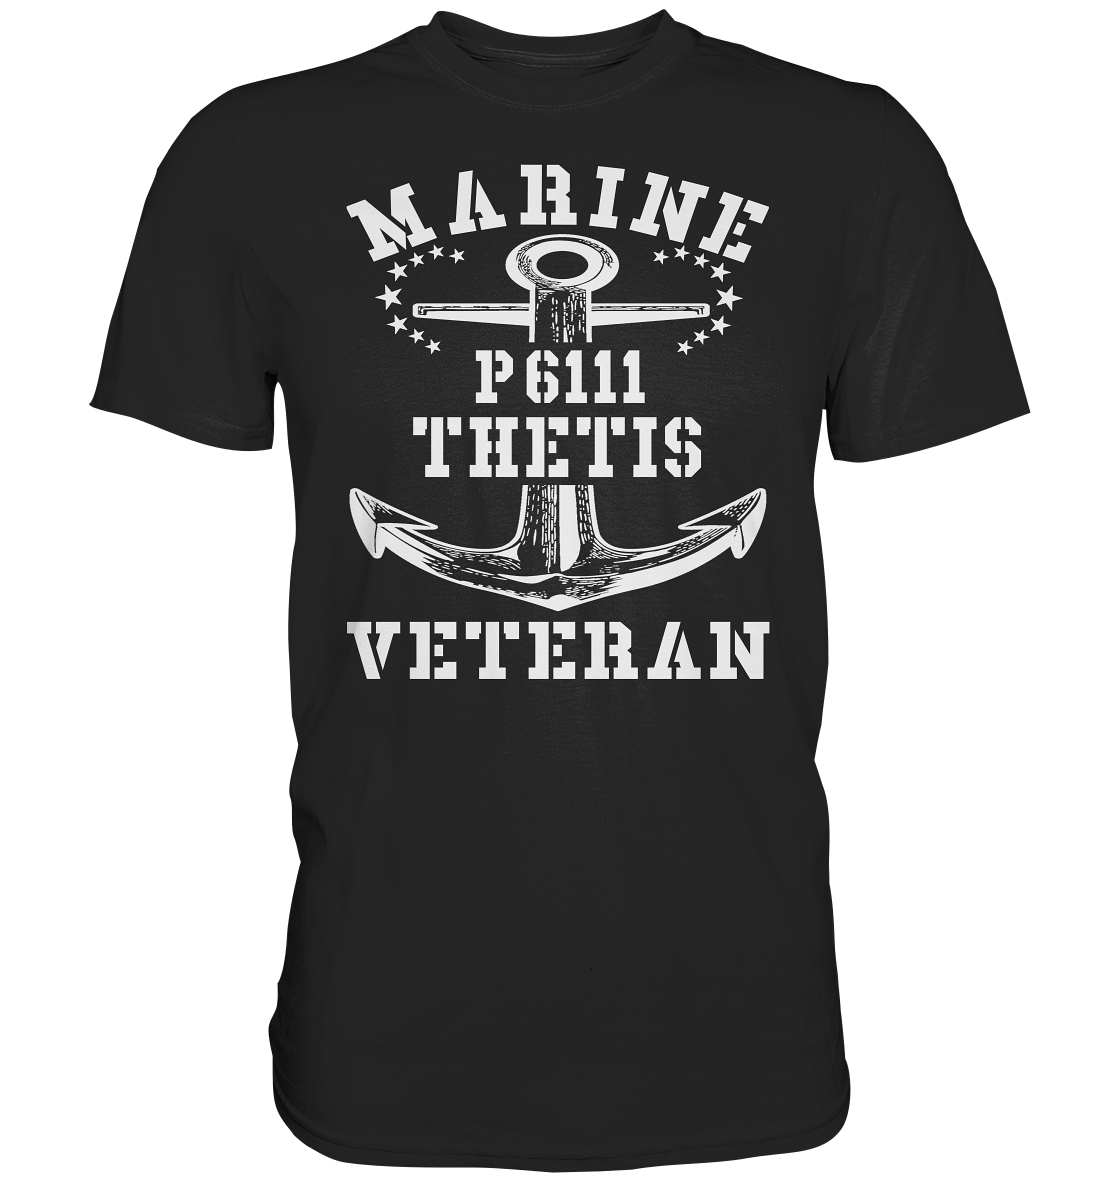 U-Jagdboot P6111 THETIS Marine Veteran - Premium Shirt